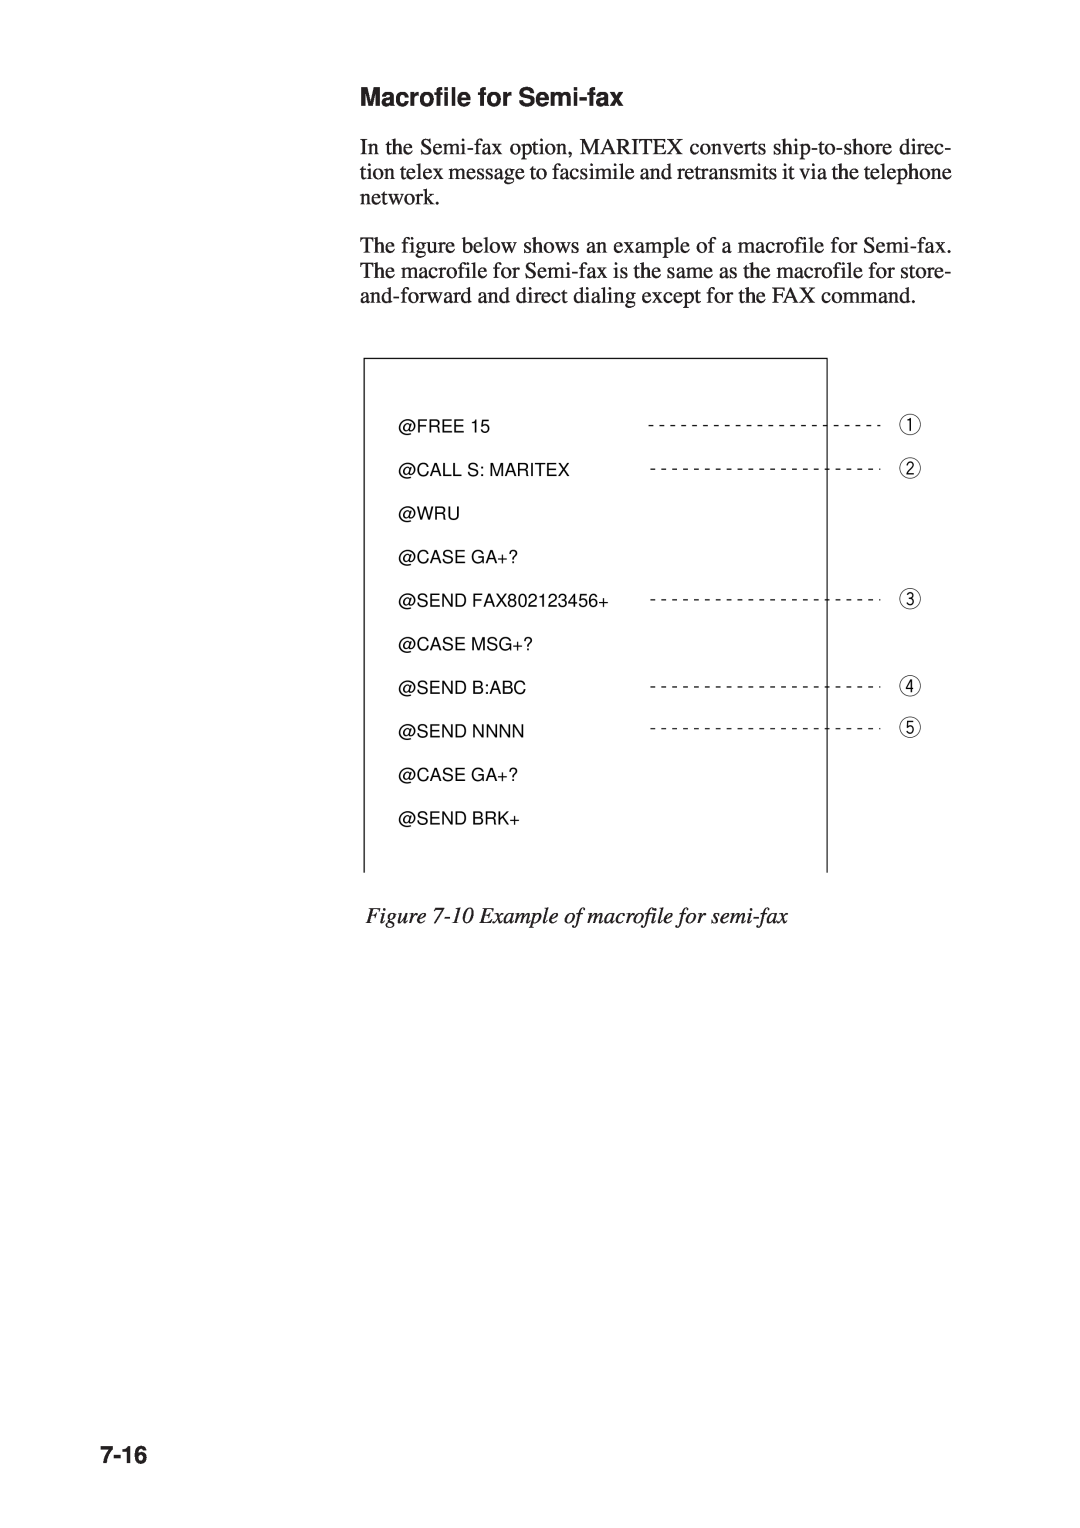 Furuno RC-1500-1T manual Macrofile for Semi-fax, 10 Example of macrofile for semi-fax, 7-16 